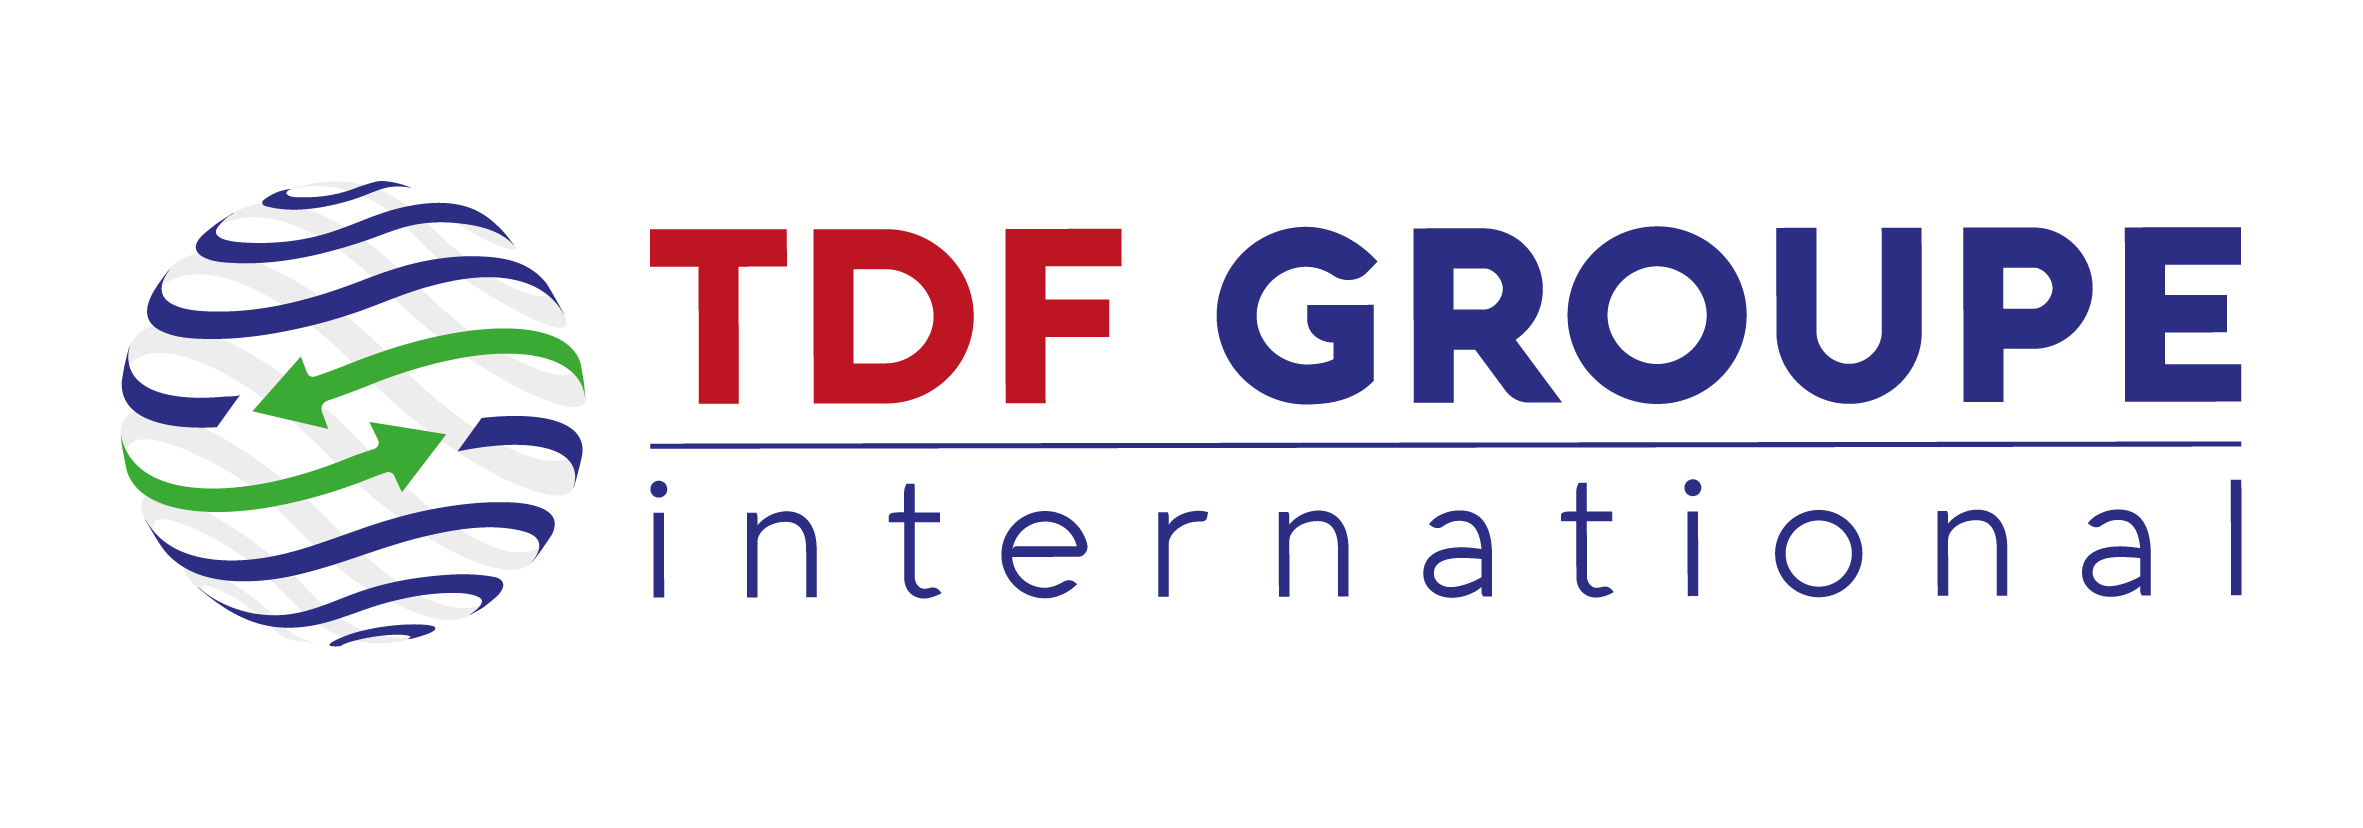 TDF Groupe